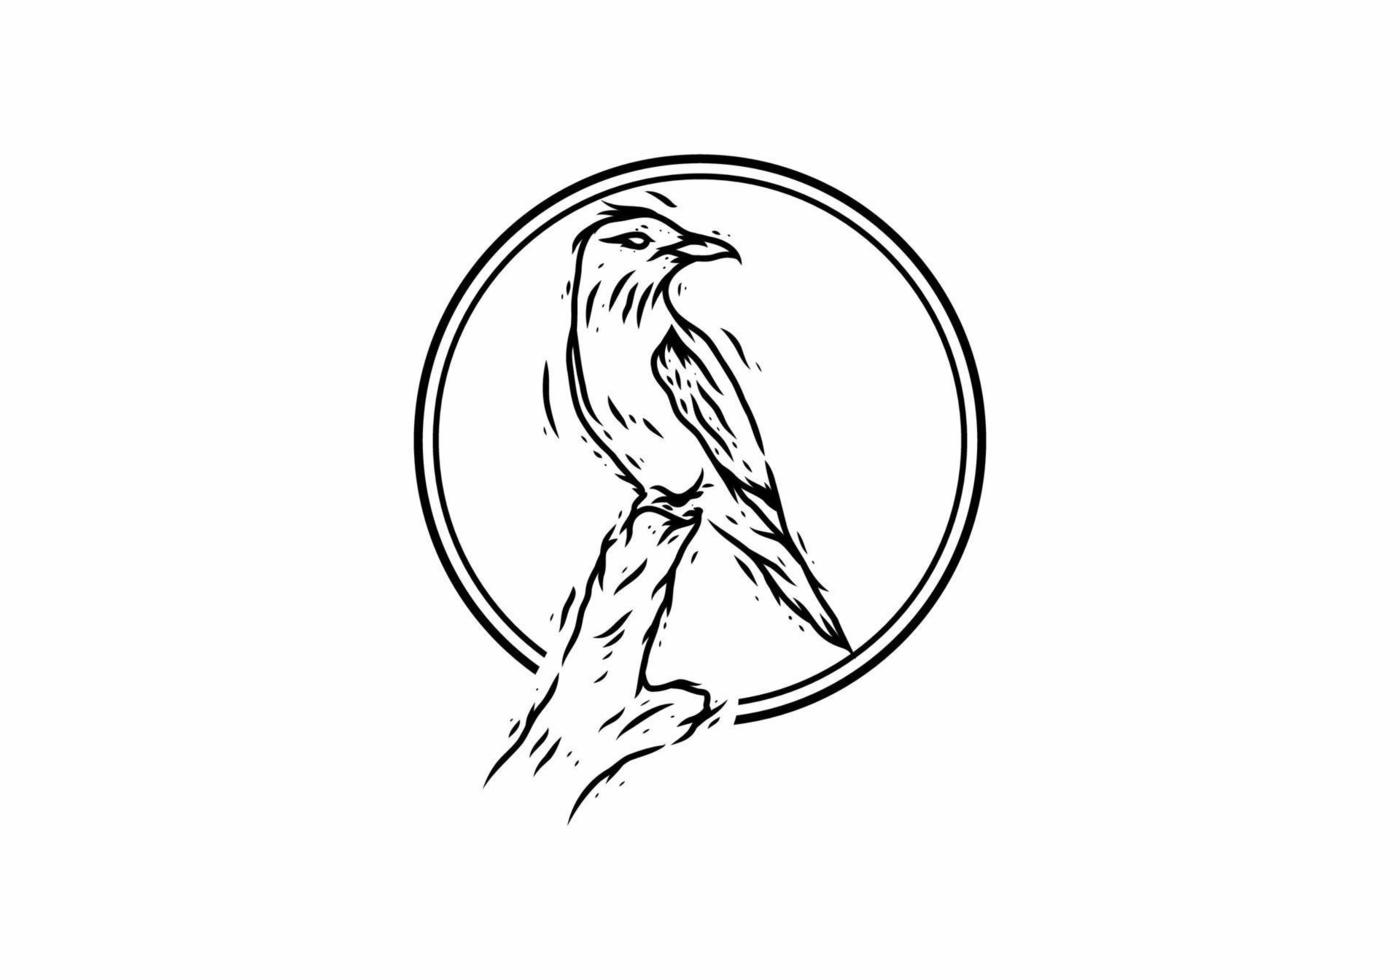 svart illustration ritning av fågel stående på en stock vektor